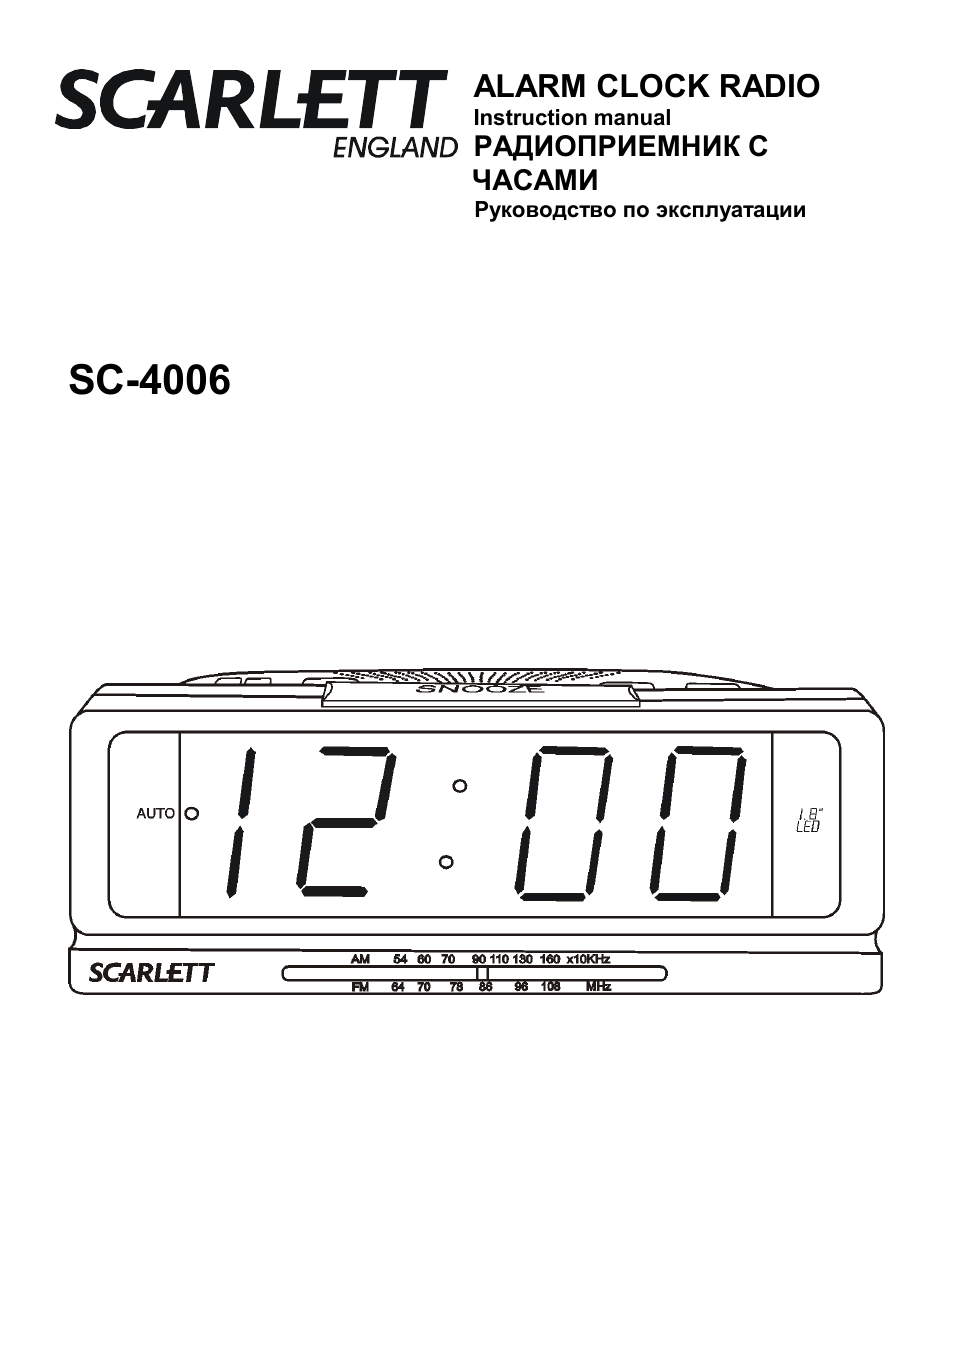 SC-4006